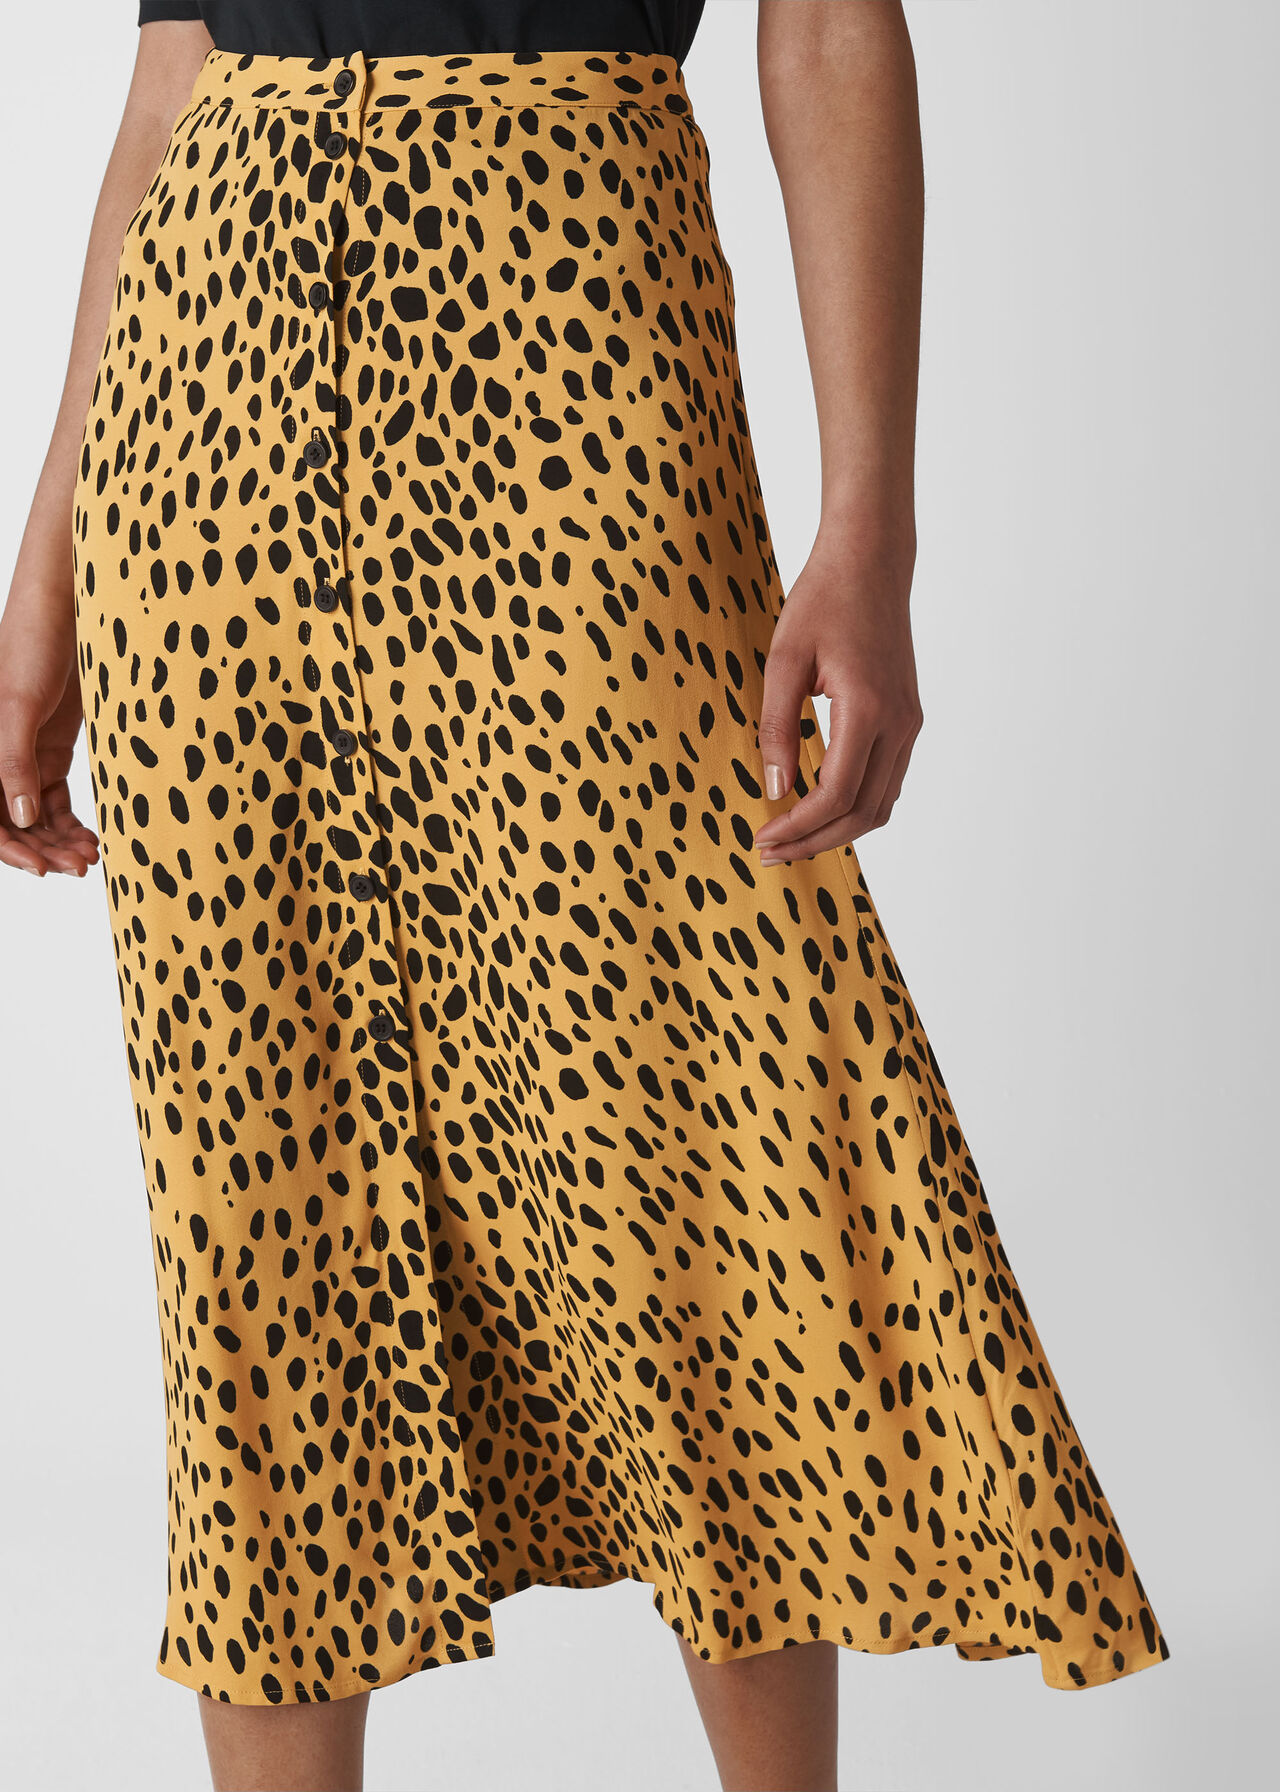 Cream/Multi Animal Print Midi Skirt | WHISTLES